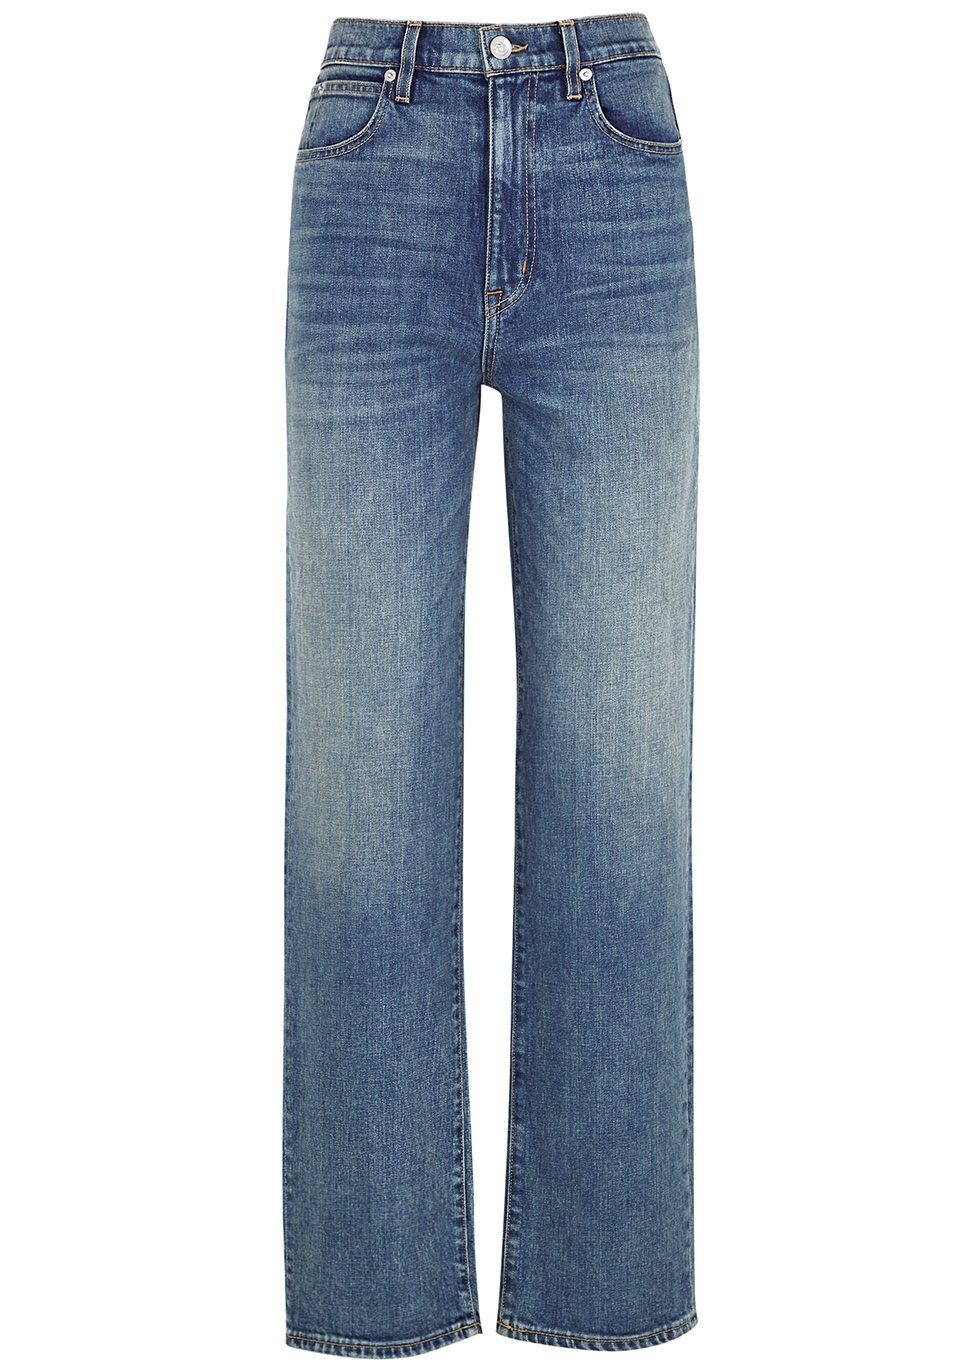 harvey nichols jeans